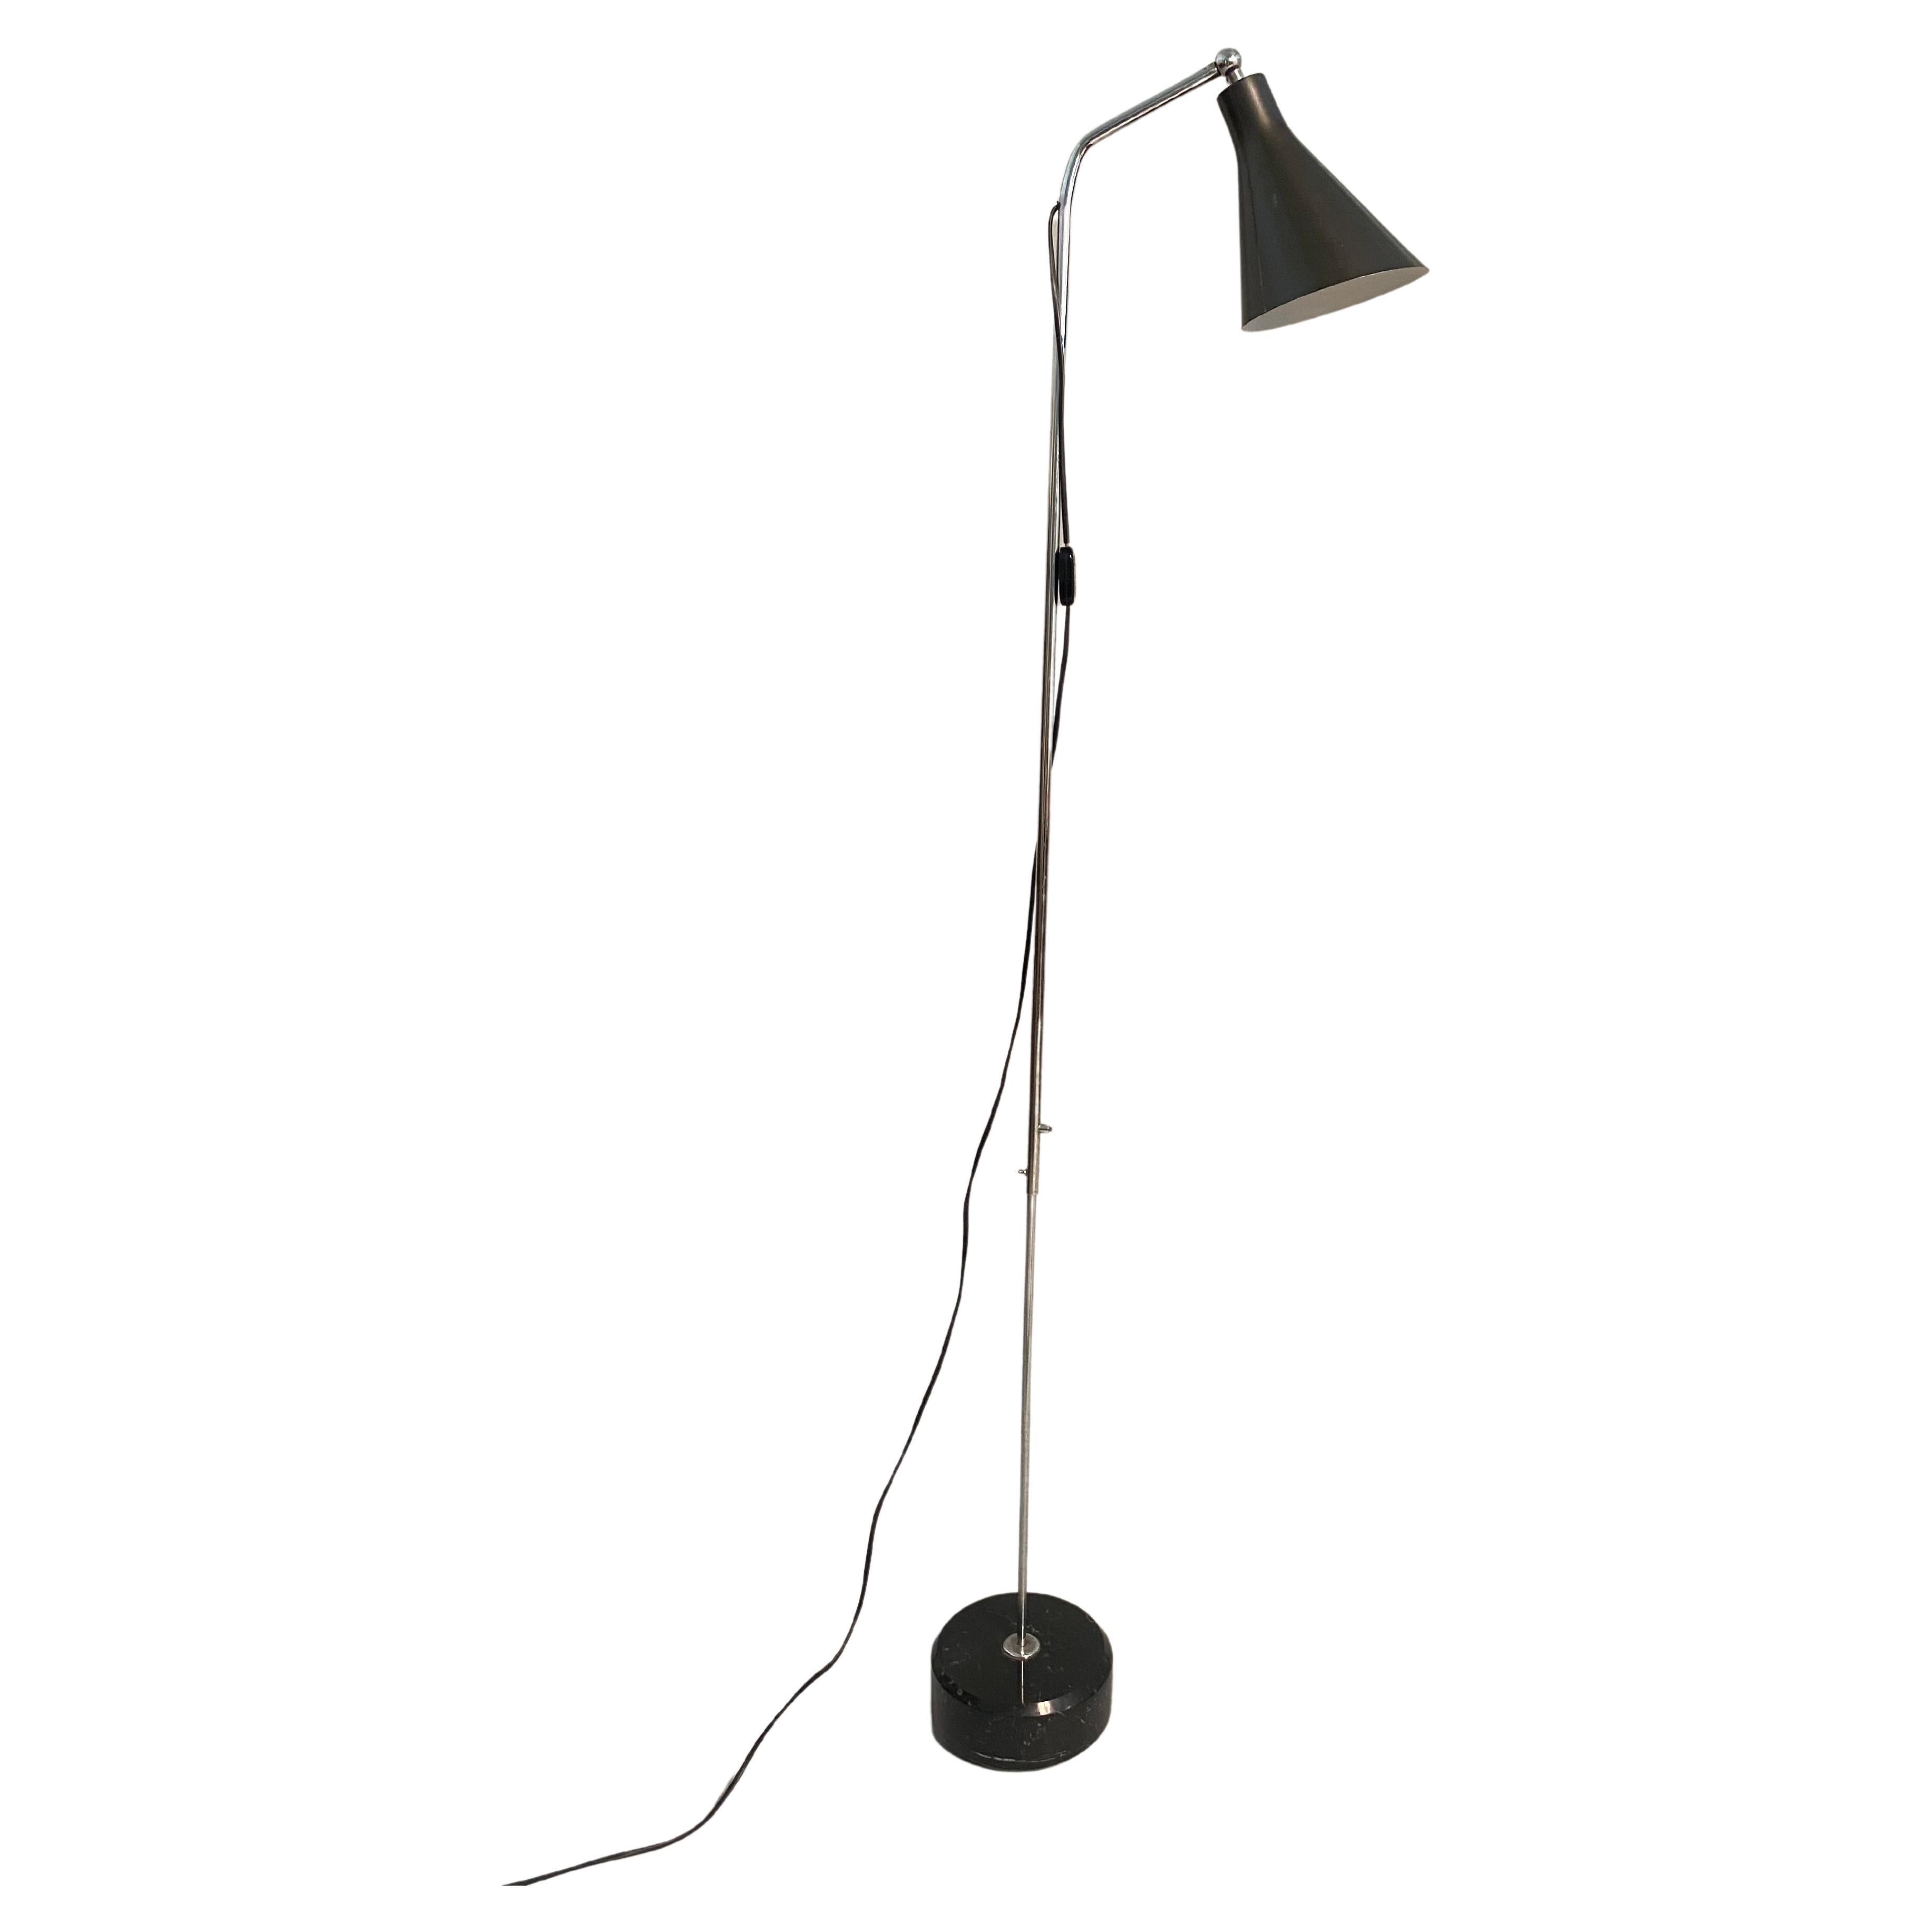 Ignazio Gardella, Extendible Floor Lamp "Alzabile" Mod. LT3 by Azucena, 1950 Ca. For Sale